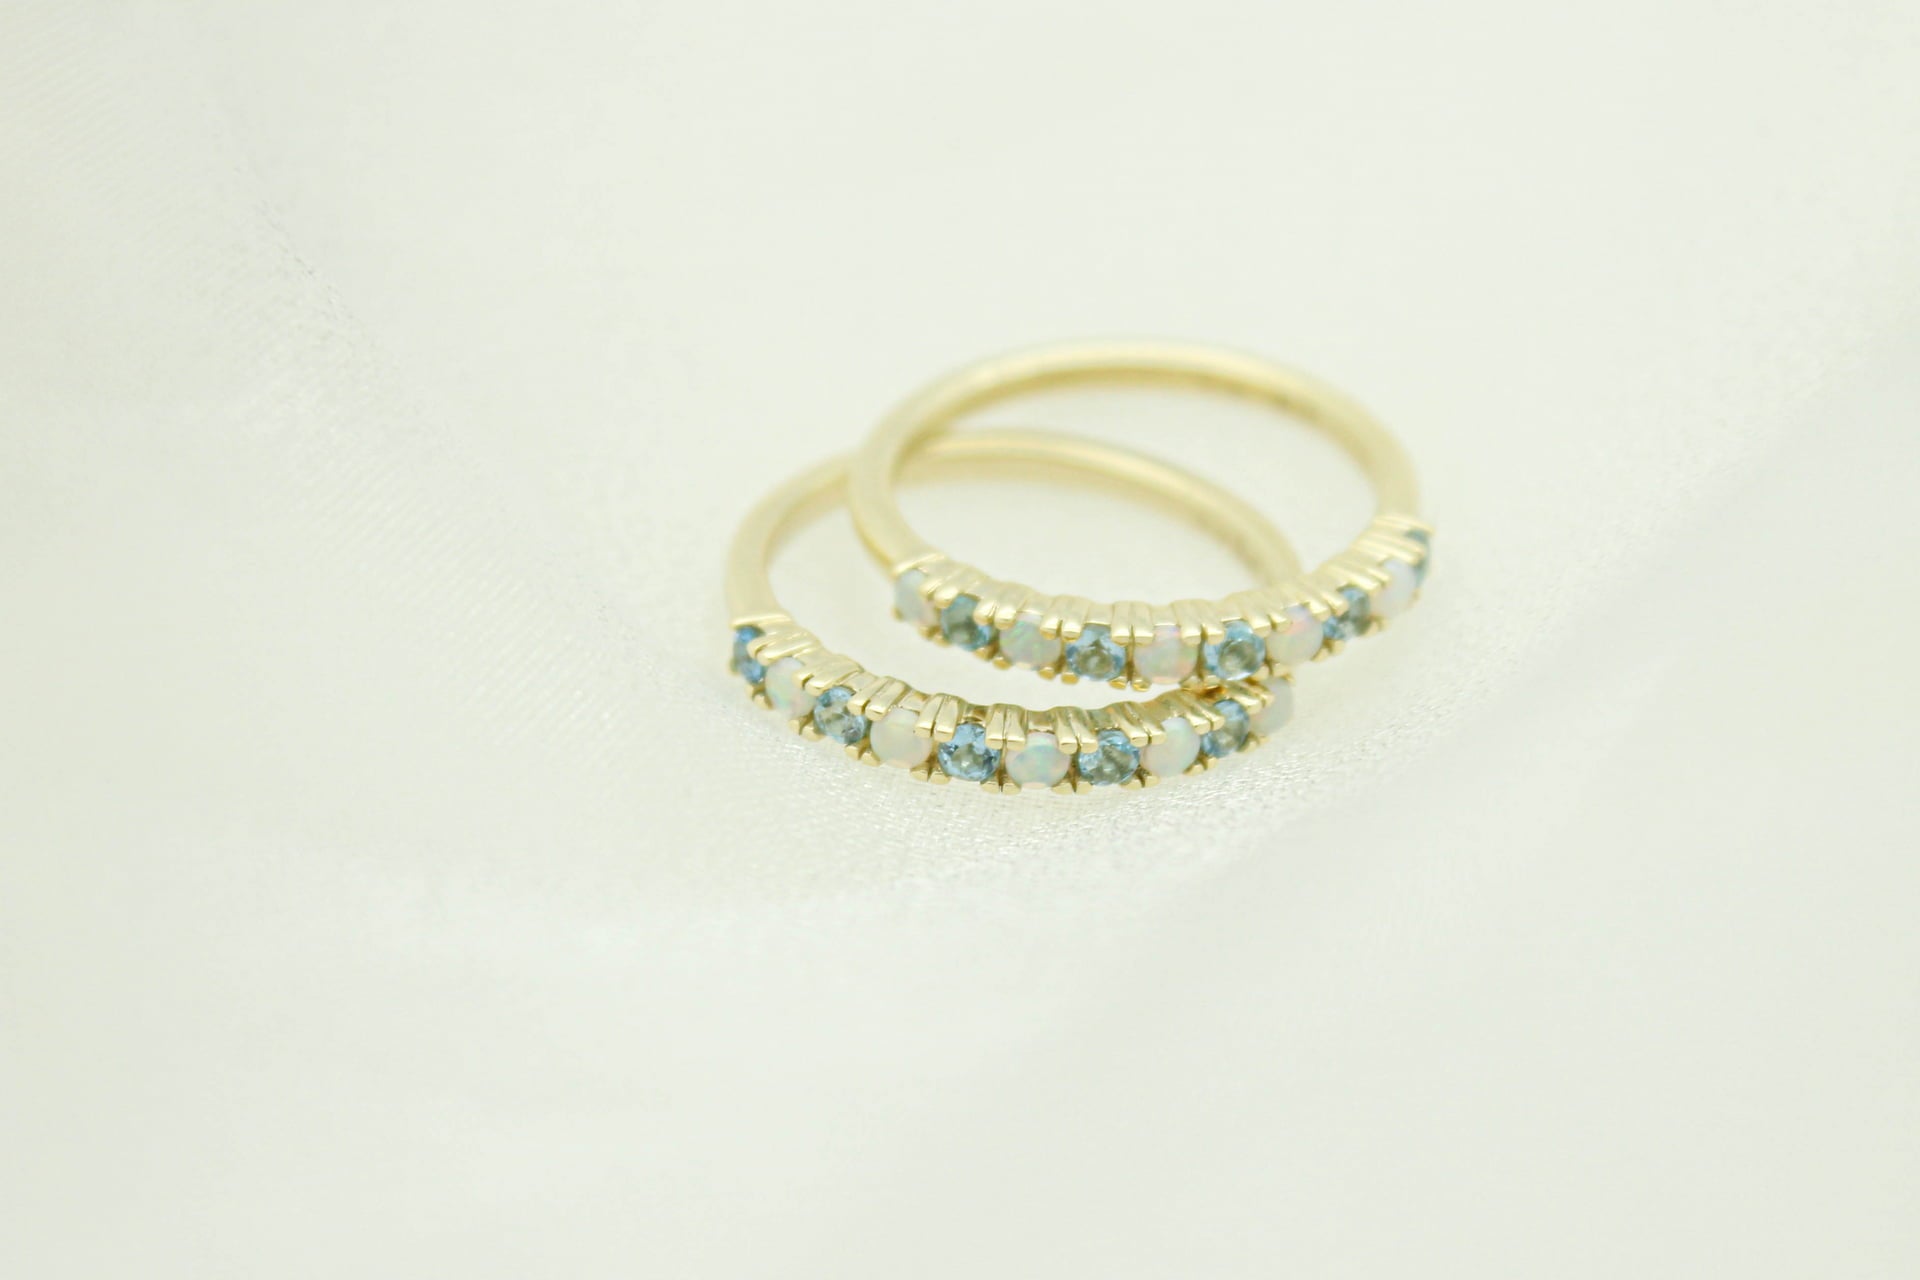 Aquamarine gemstones set in a gold bands.